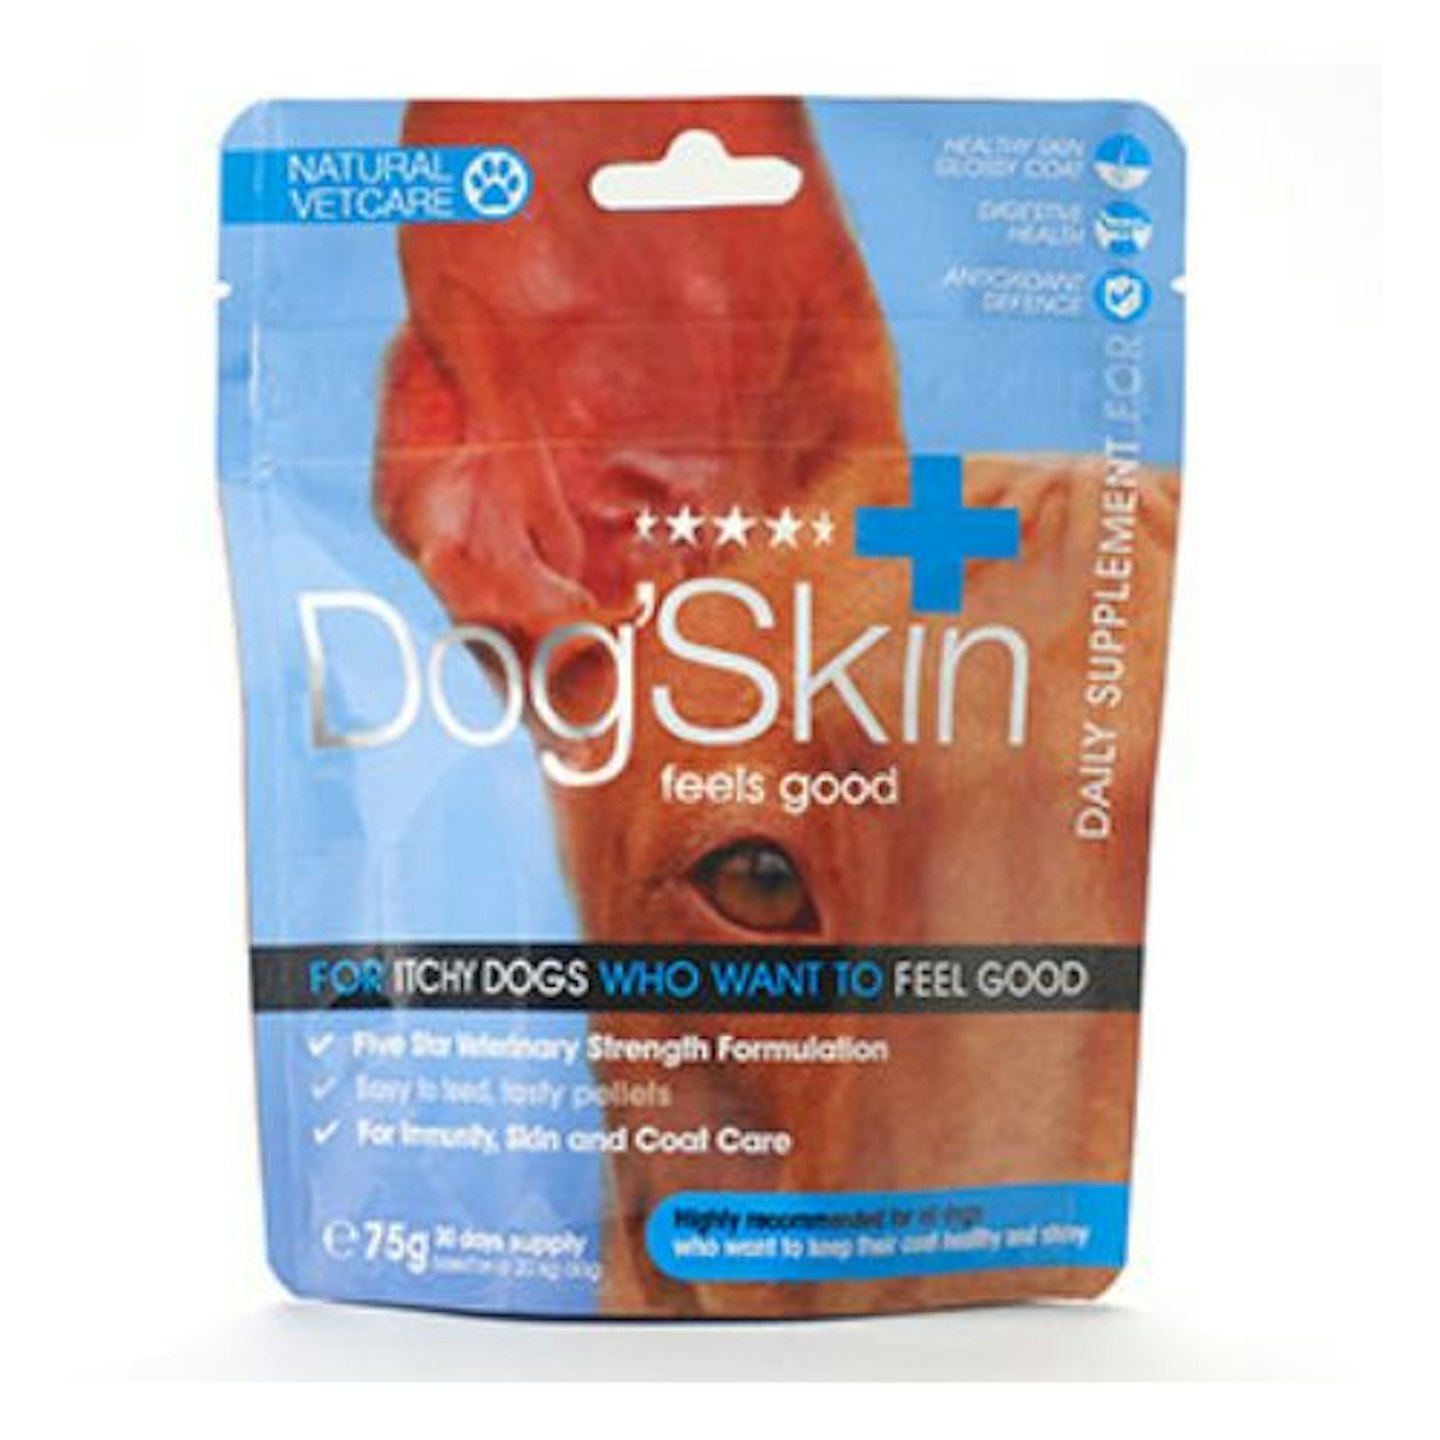 Natural Vetcare Dog'skin Supplement